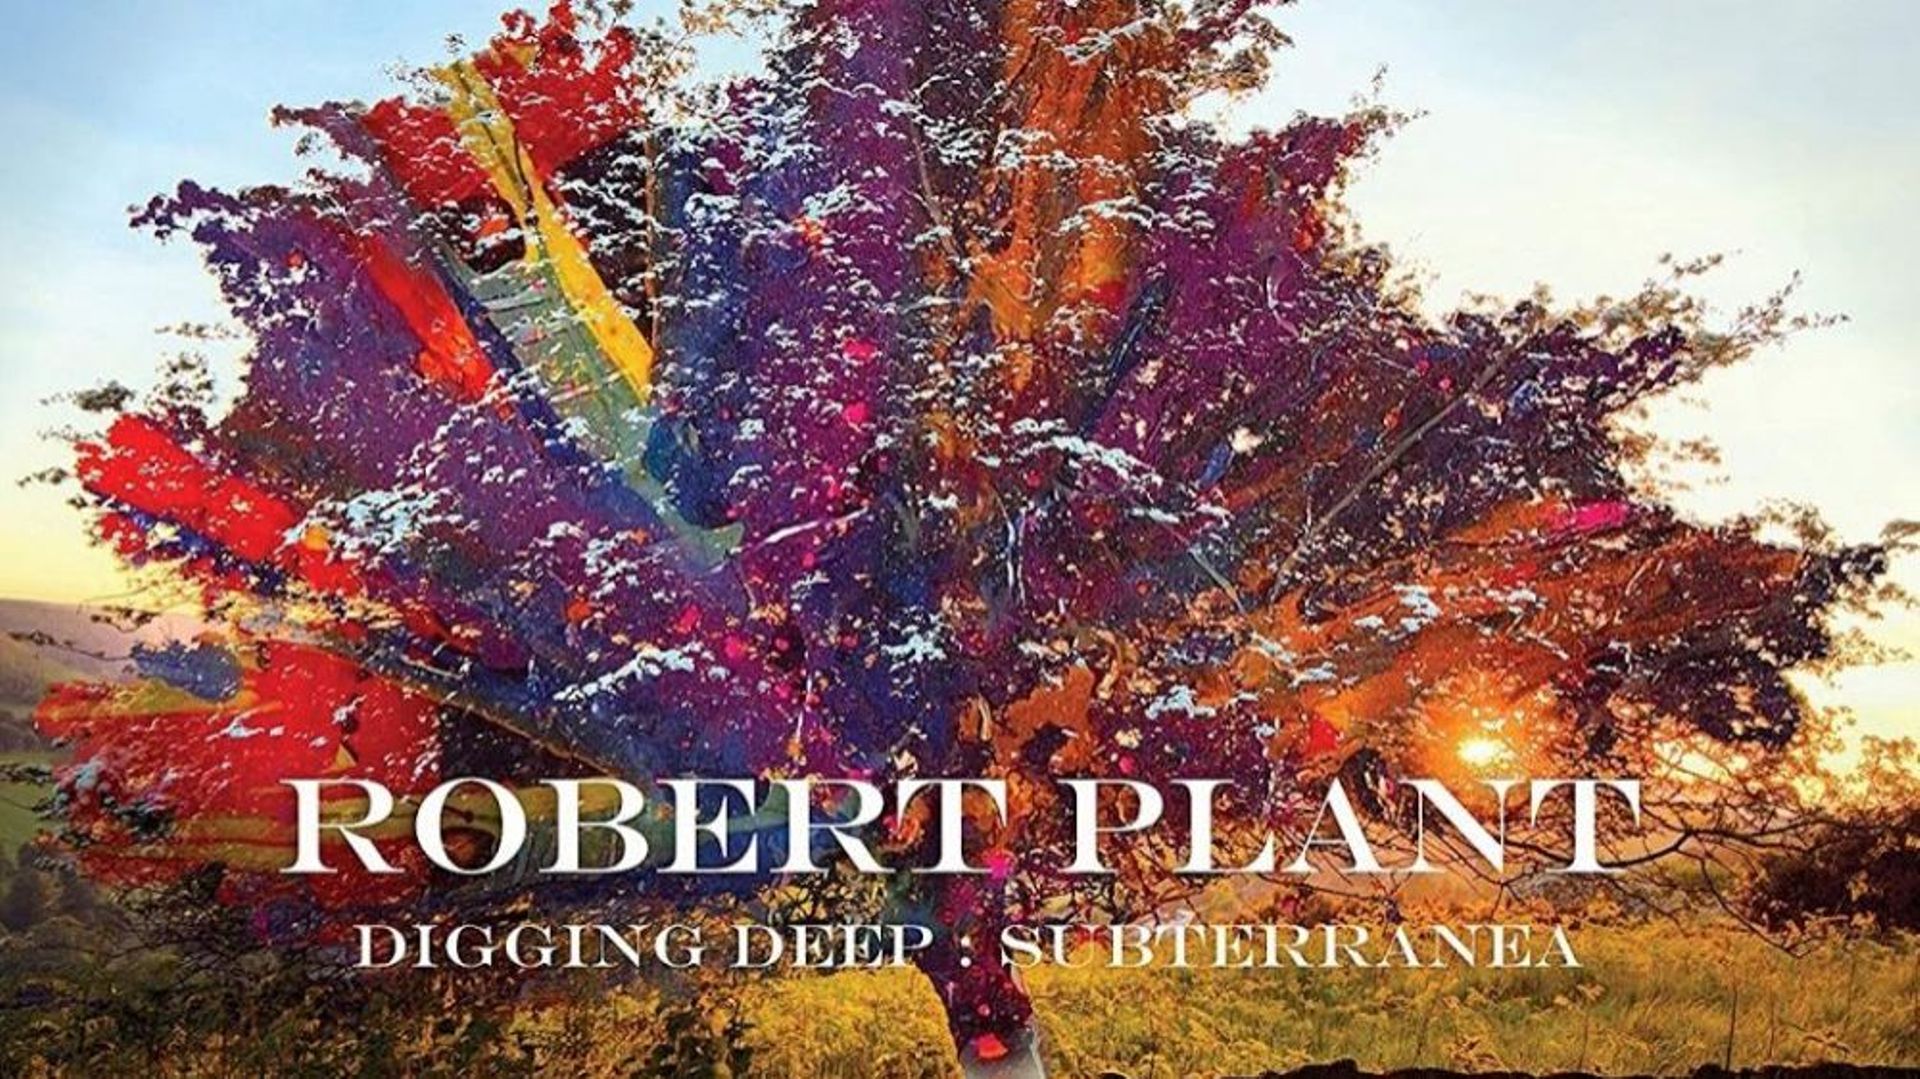 Robert Plant - "Digging Deep : Subterranea"